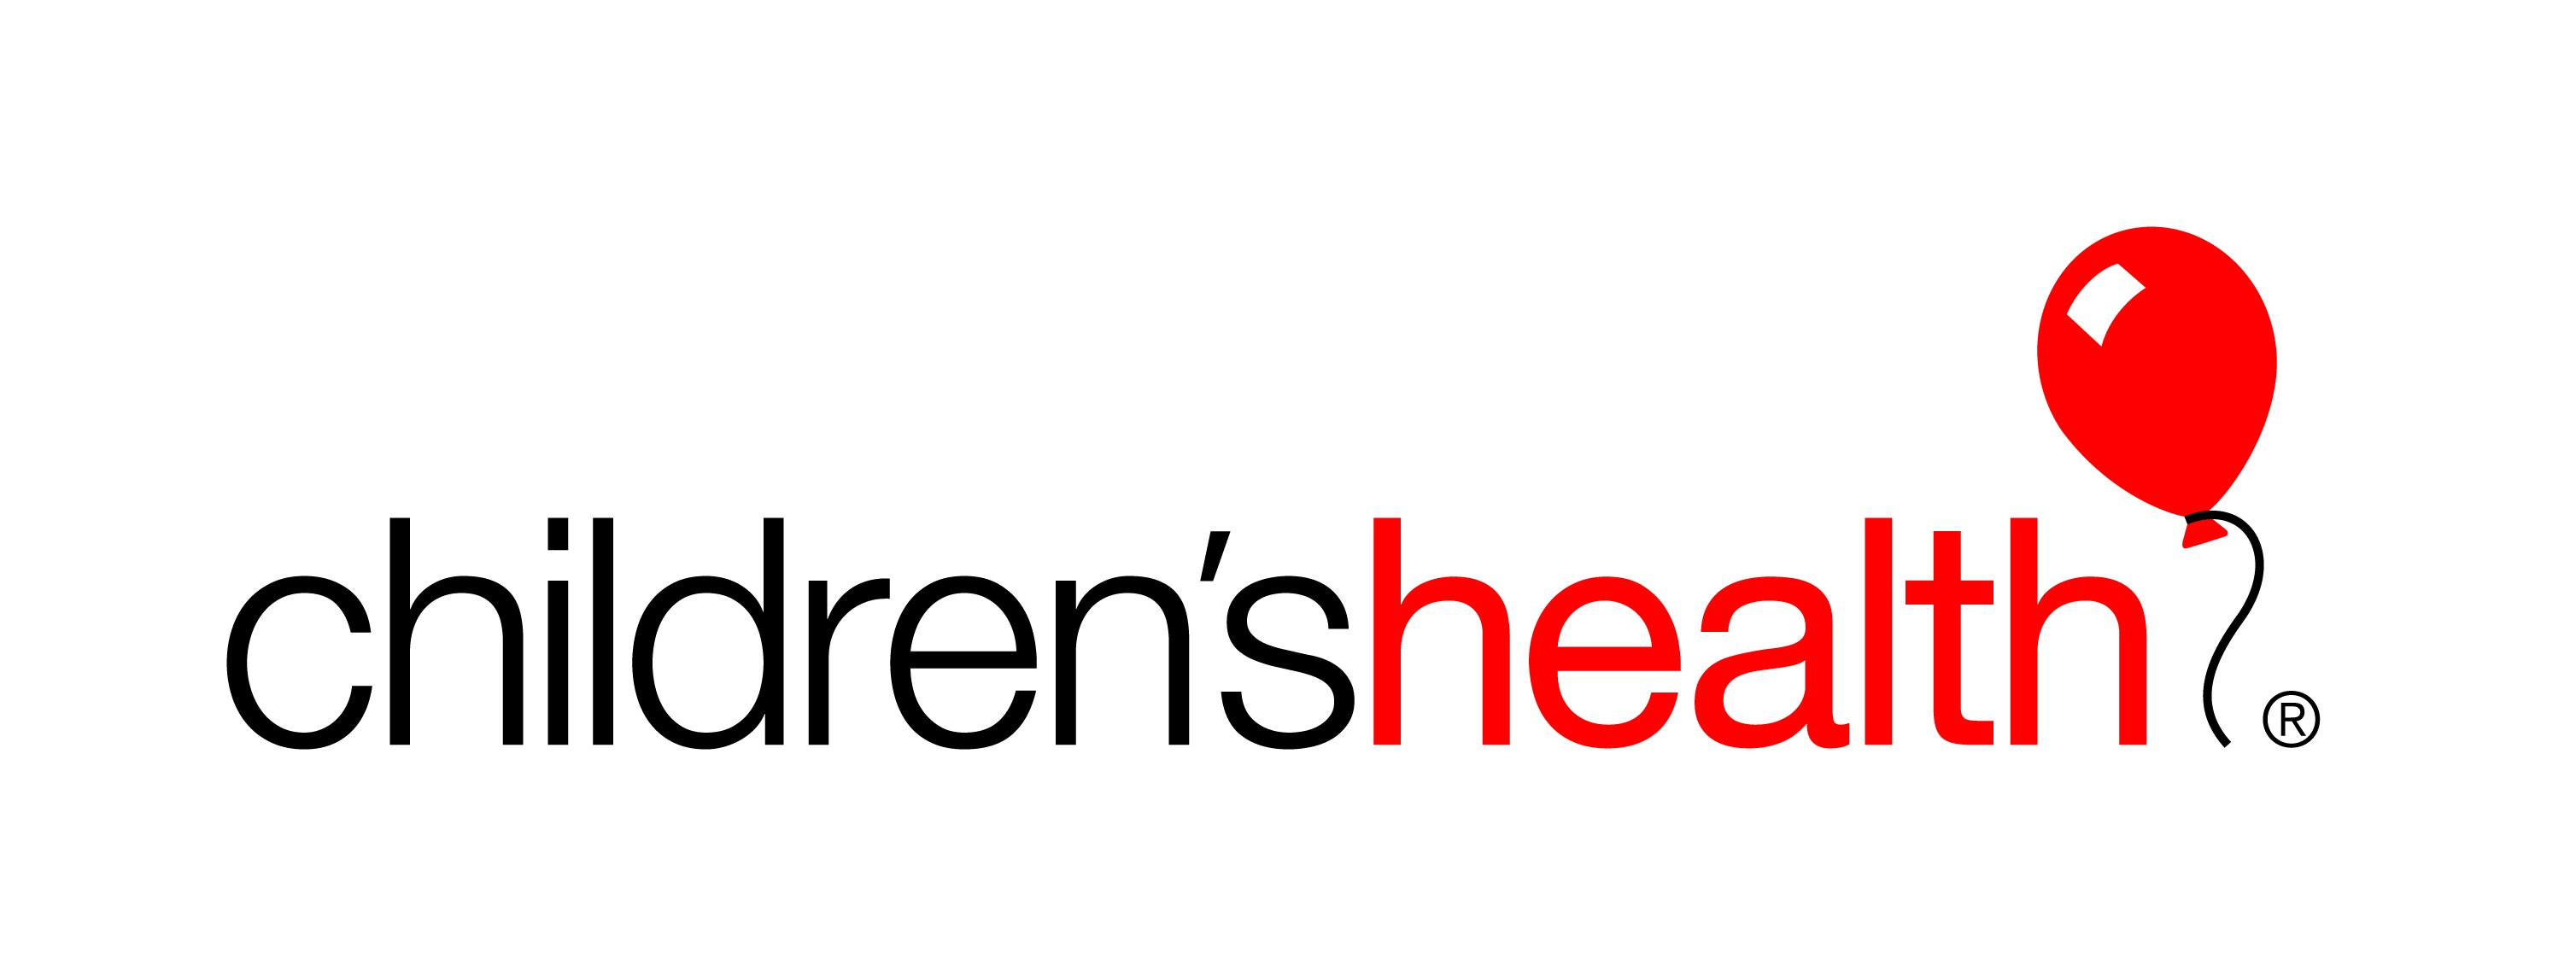 Beyond ABC - Logo - https://s41078.pcdn.co/wp-content/uploads/2019/07/CauseAdvocacy_Childrens-Health-Logo.jpg